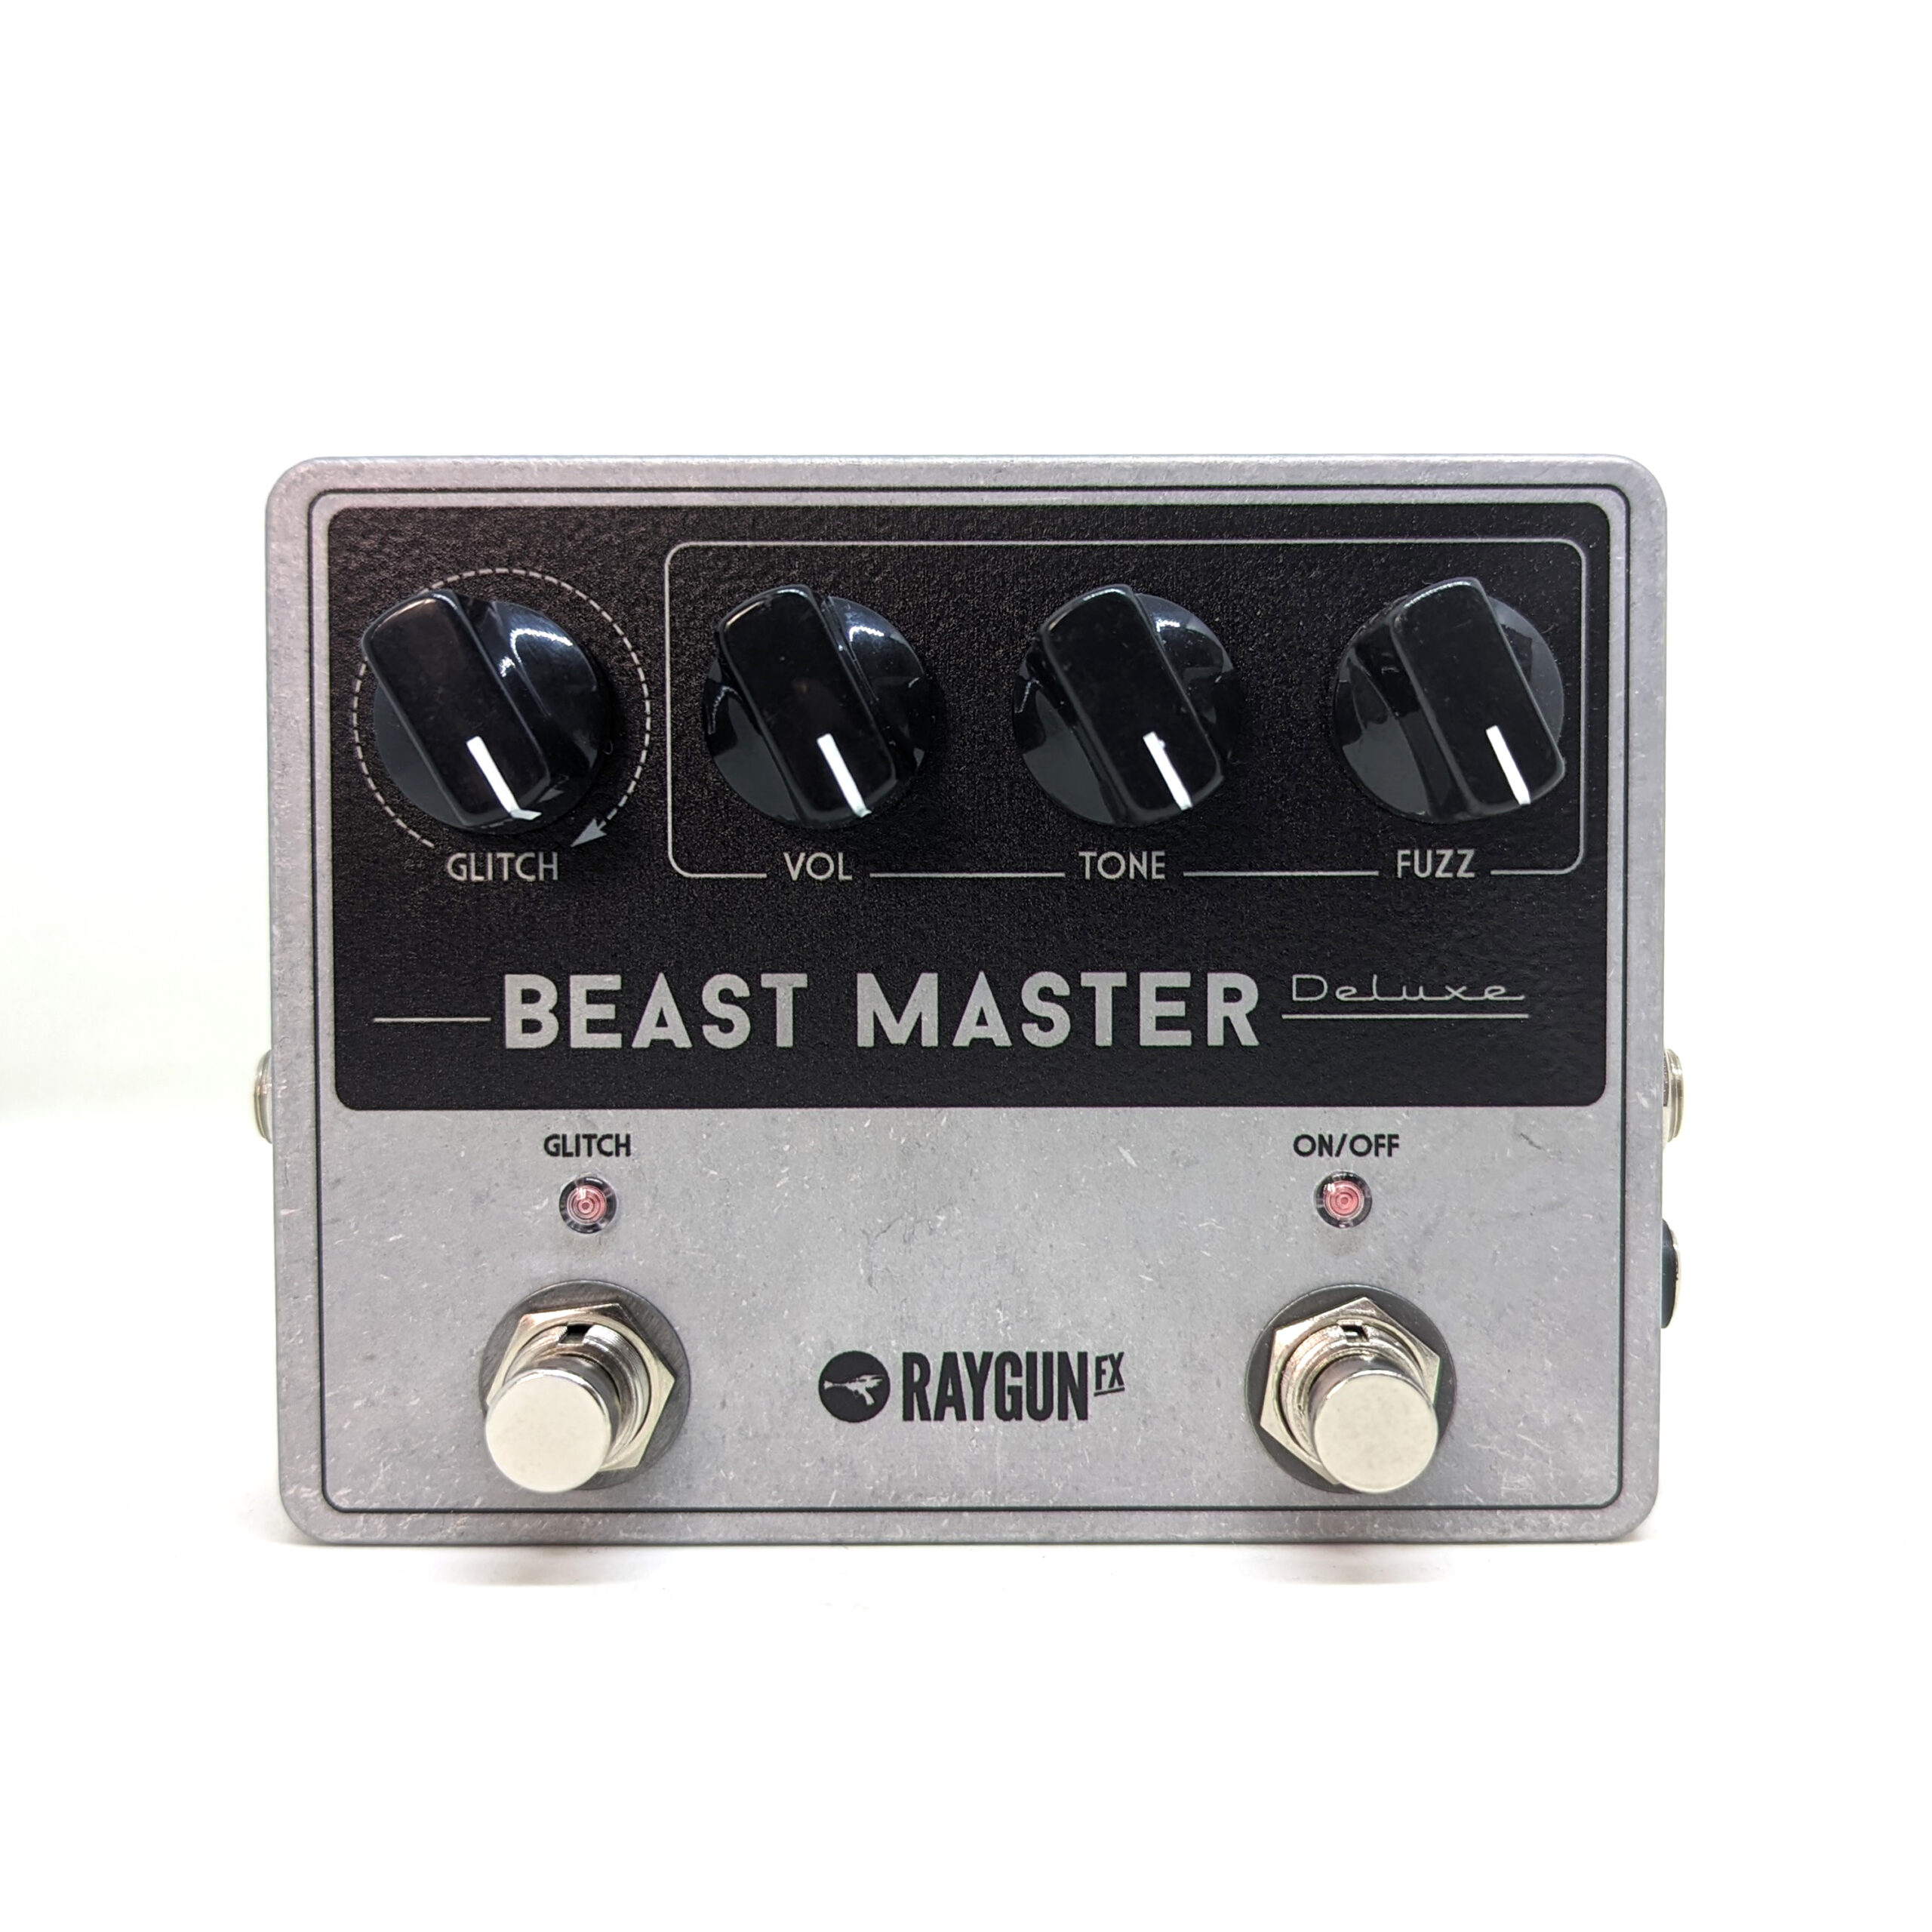 Raygun FX Beast Master Deluxe - Handmade Guitar Fx Pedal